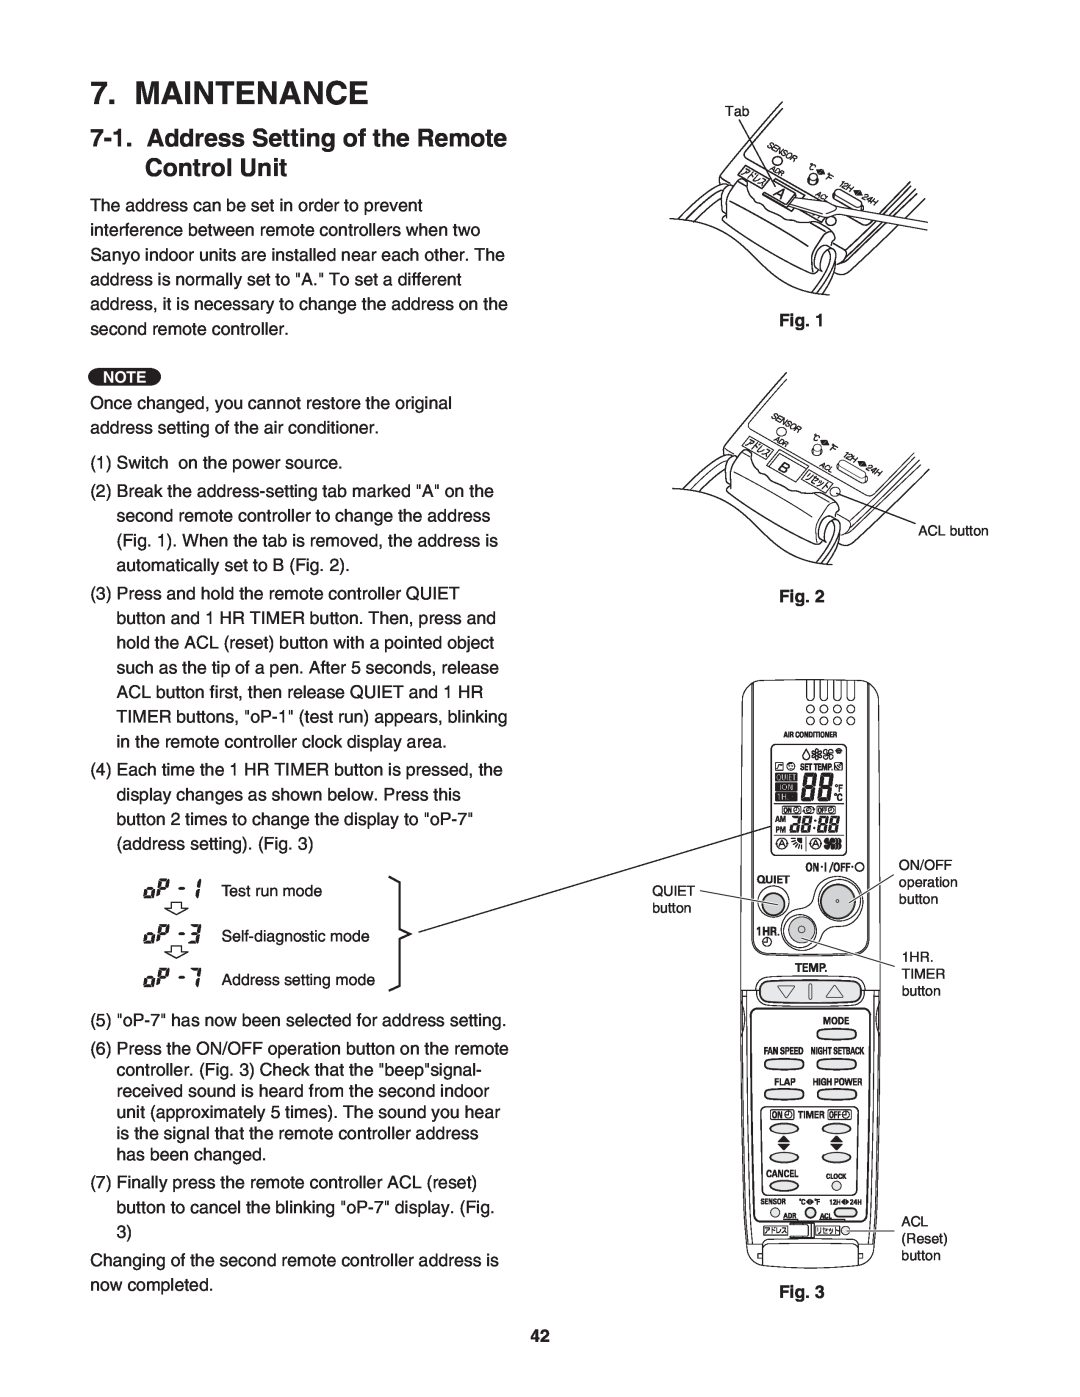 Panasonic CU-KS18NKU, CS-KS18NKU service manual Maintenance, Address Setting of the Remote Control Unit 